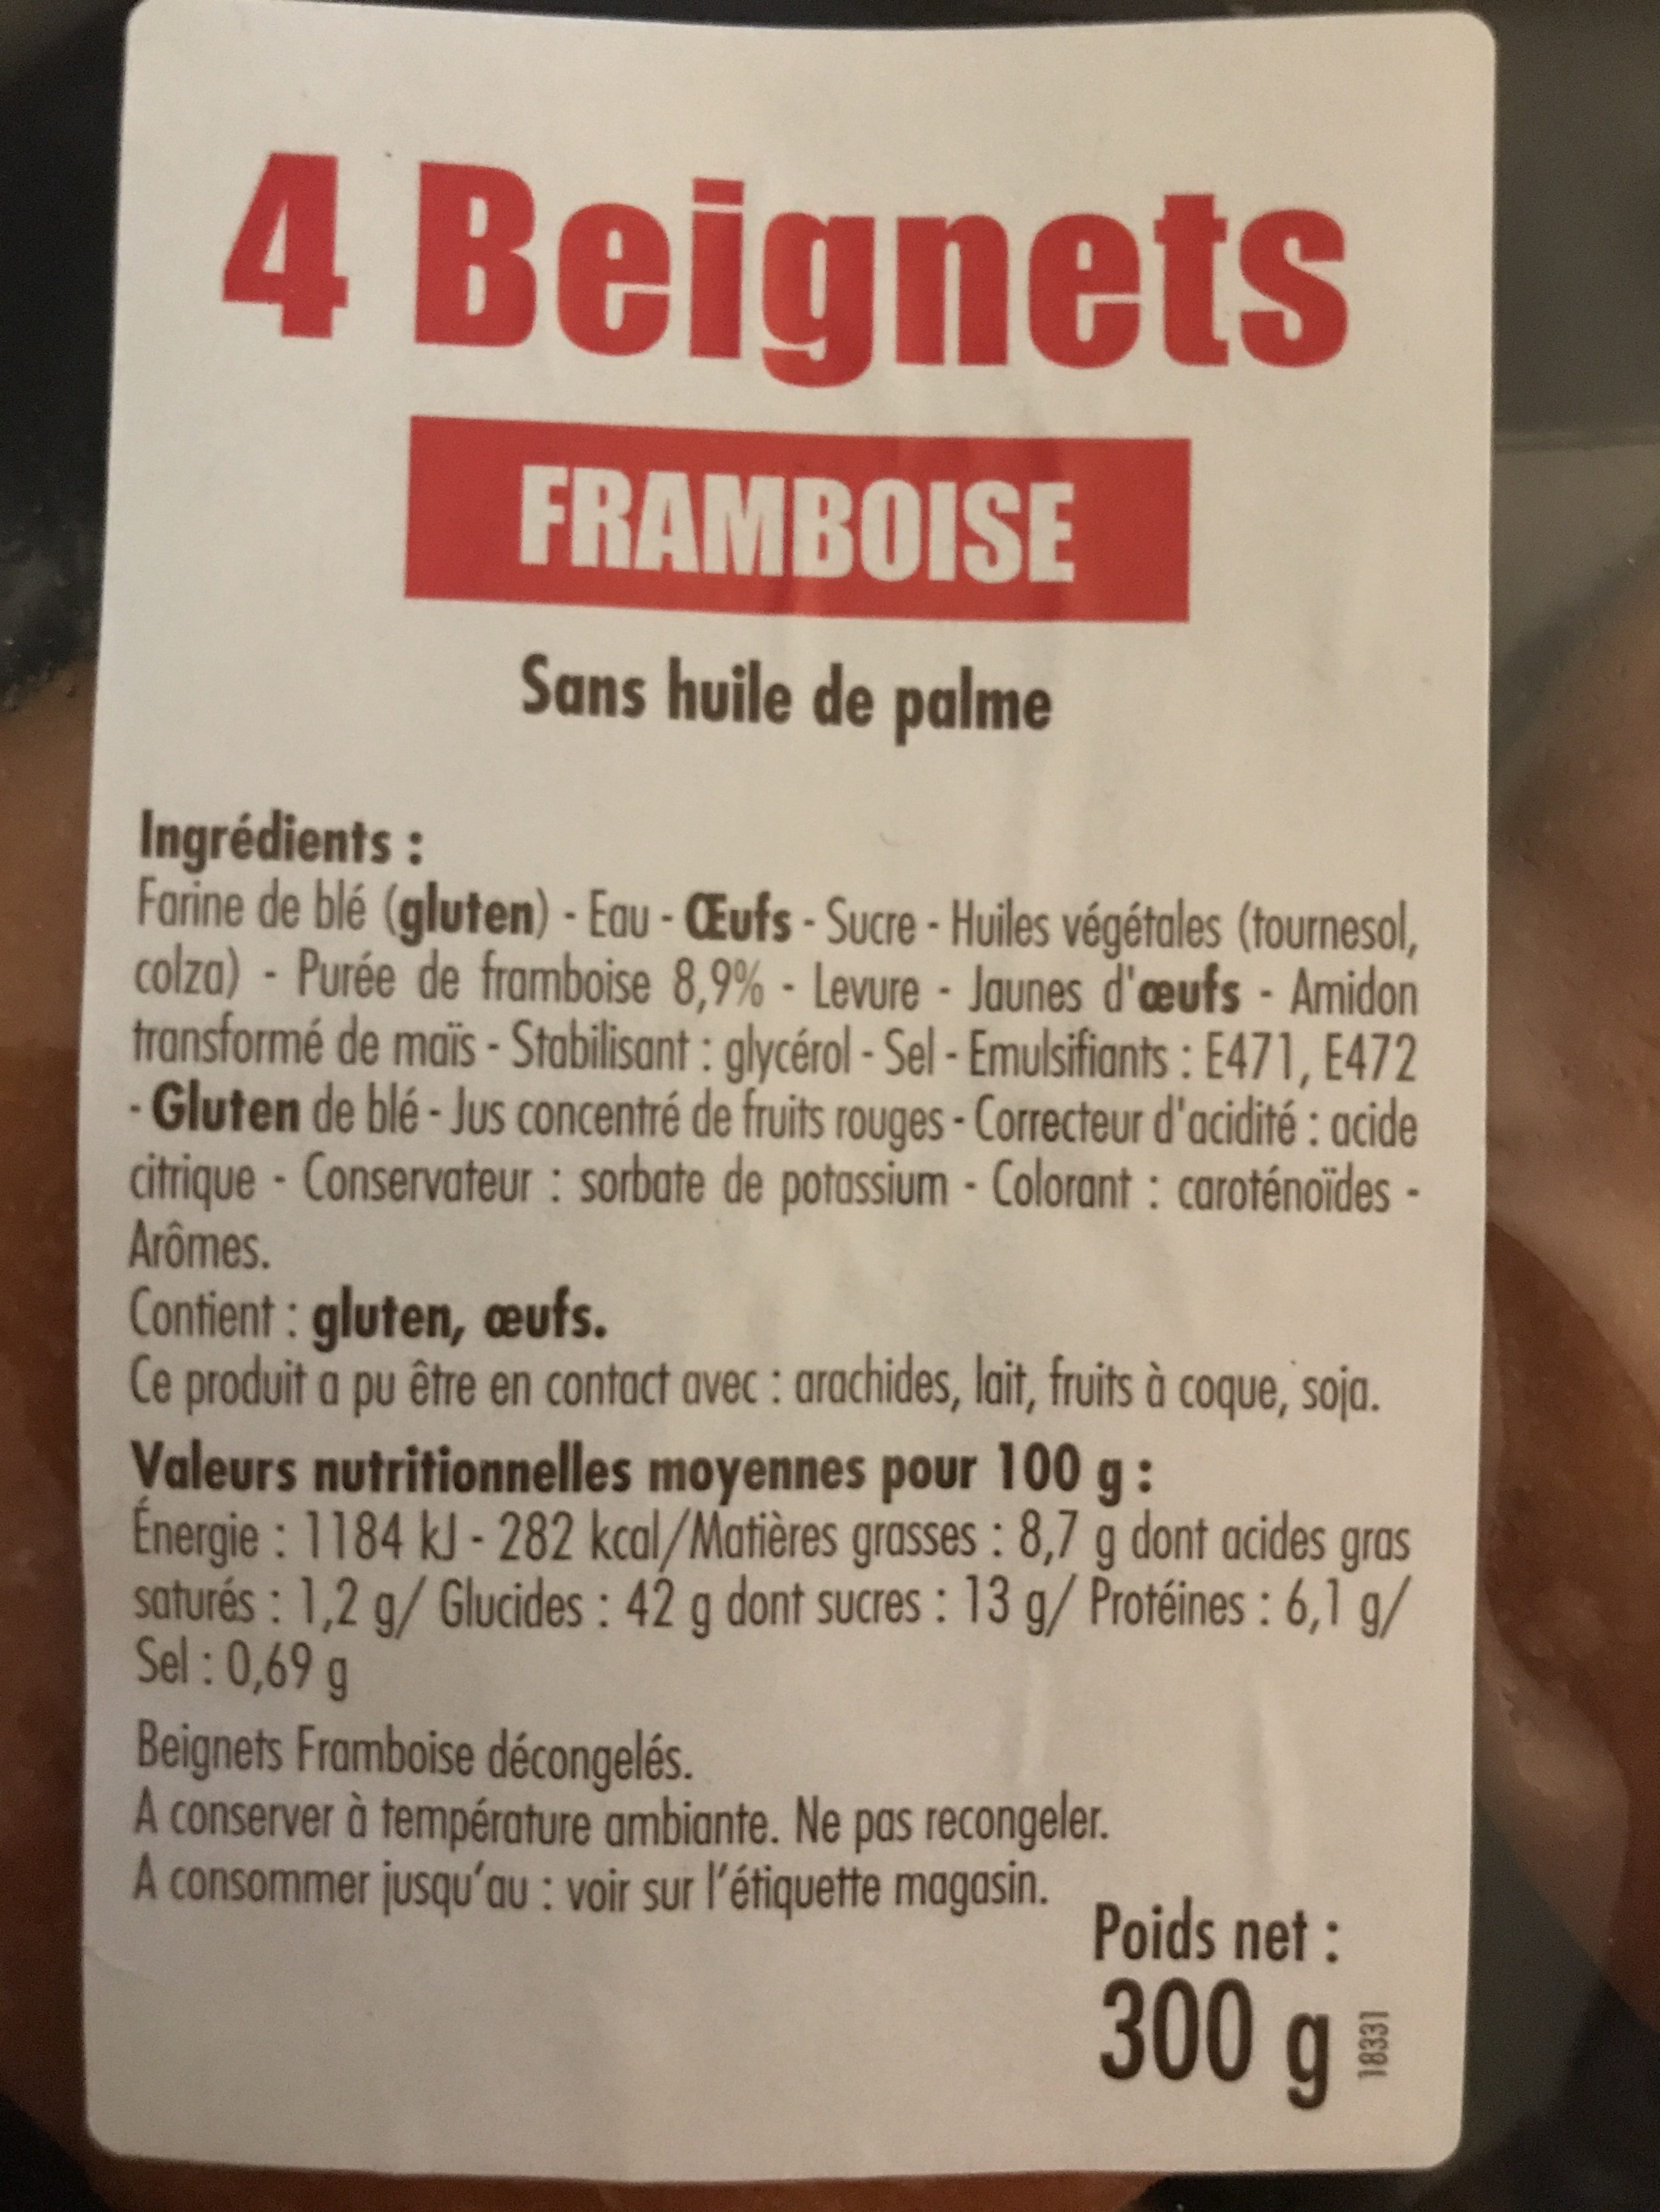 Beignets framboise - Ingredients - fr